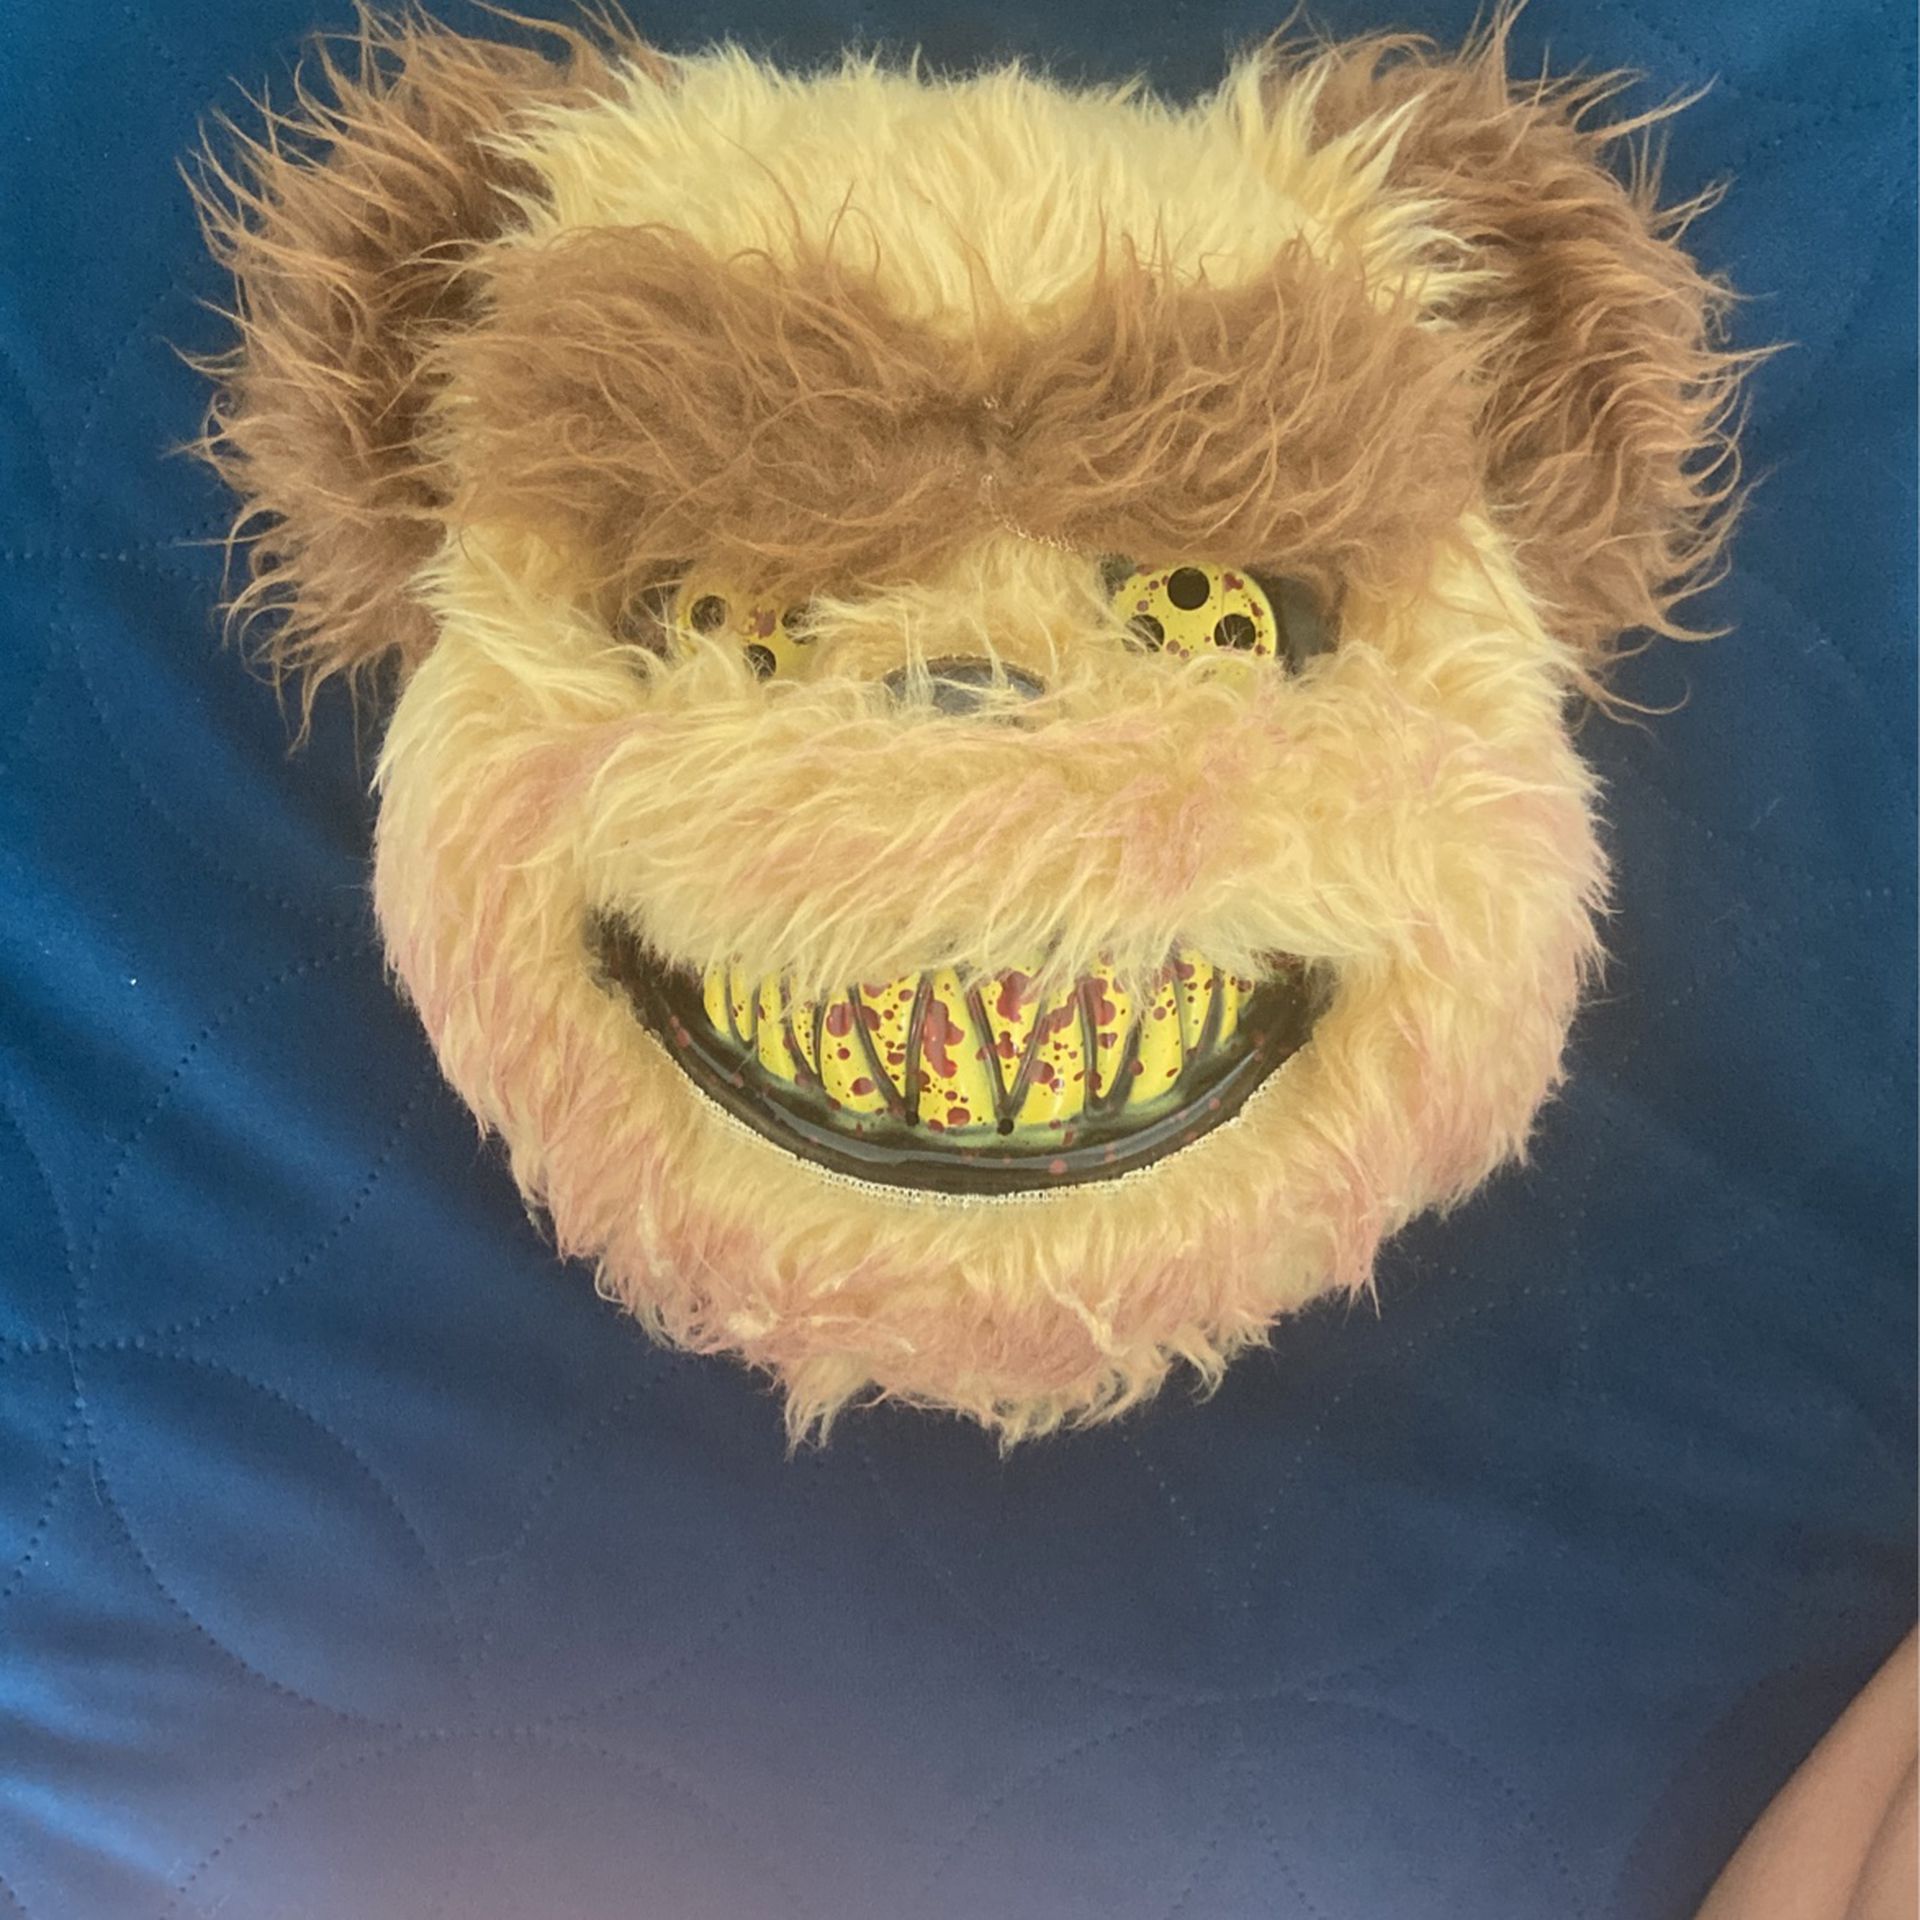 Scary Bear Halloween Mask|NEGOCIABLE